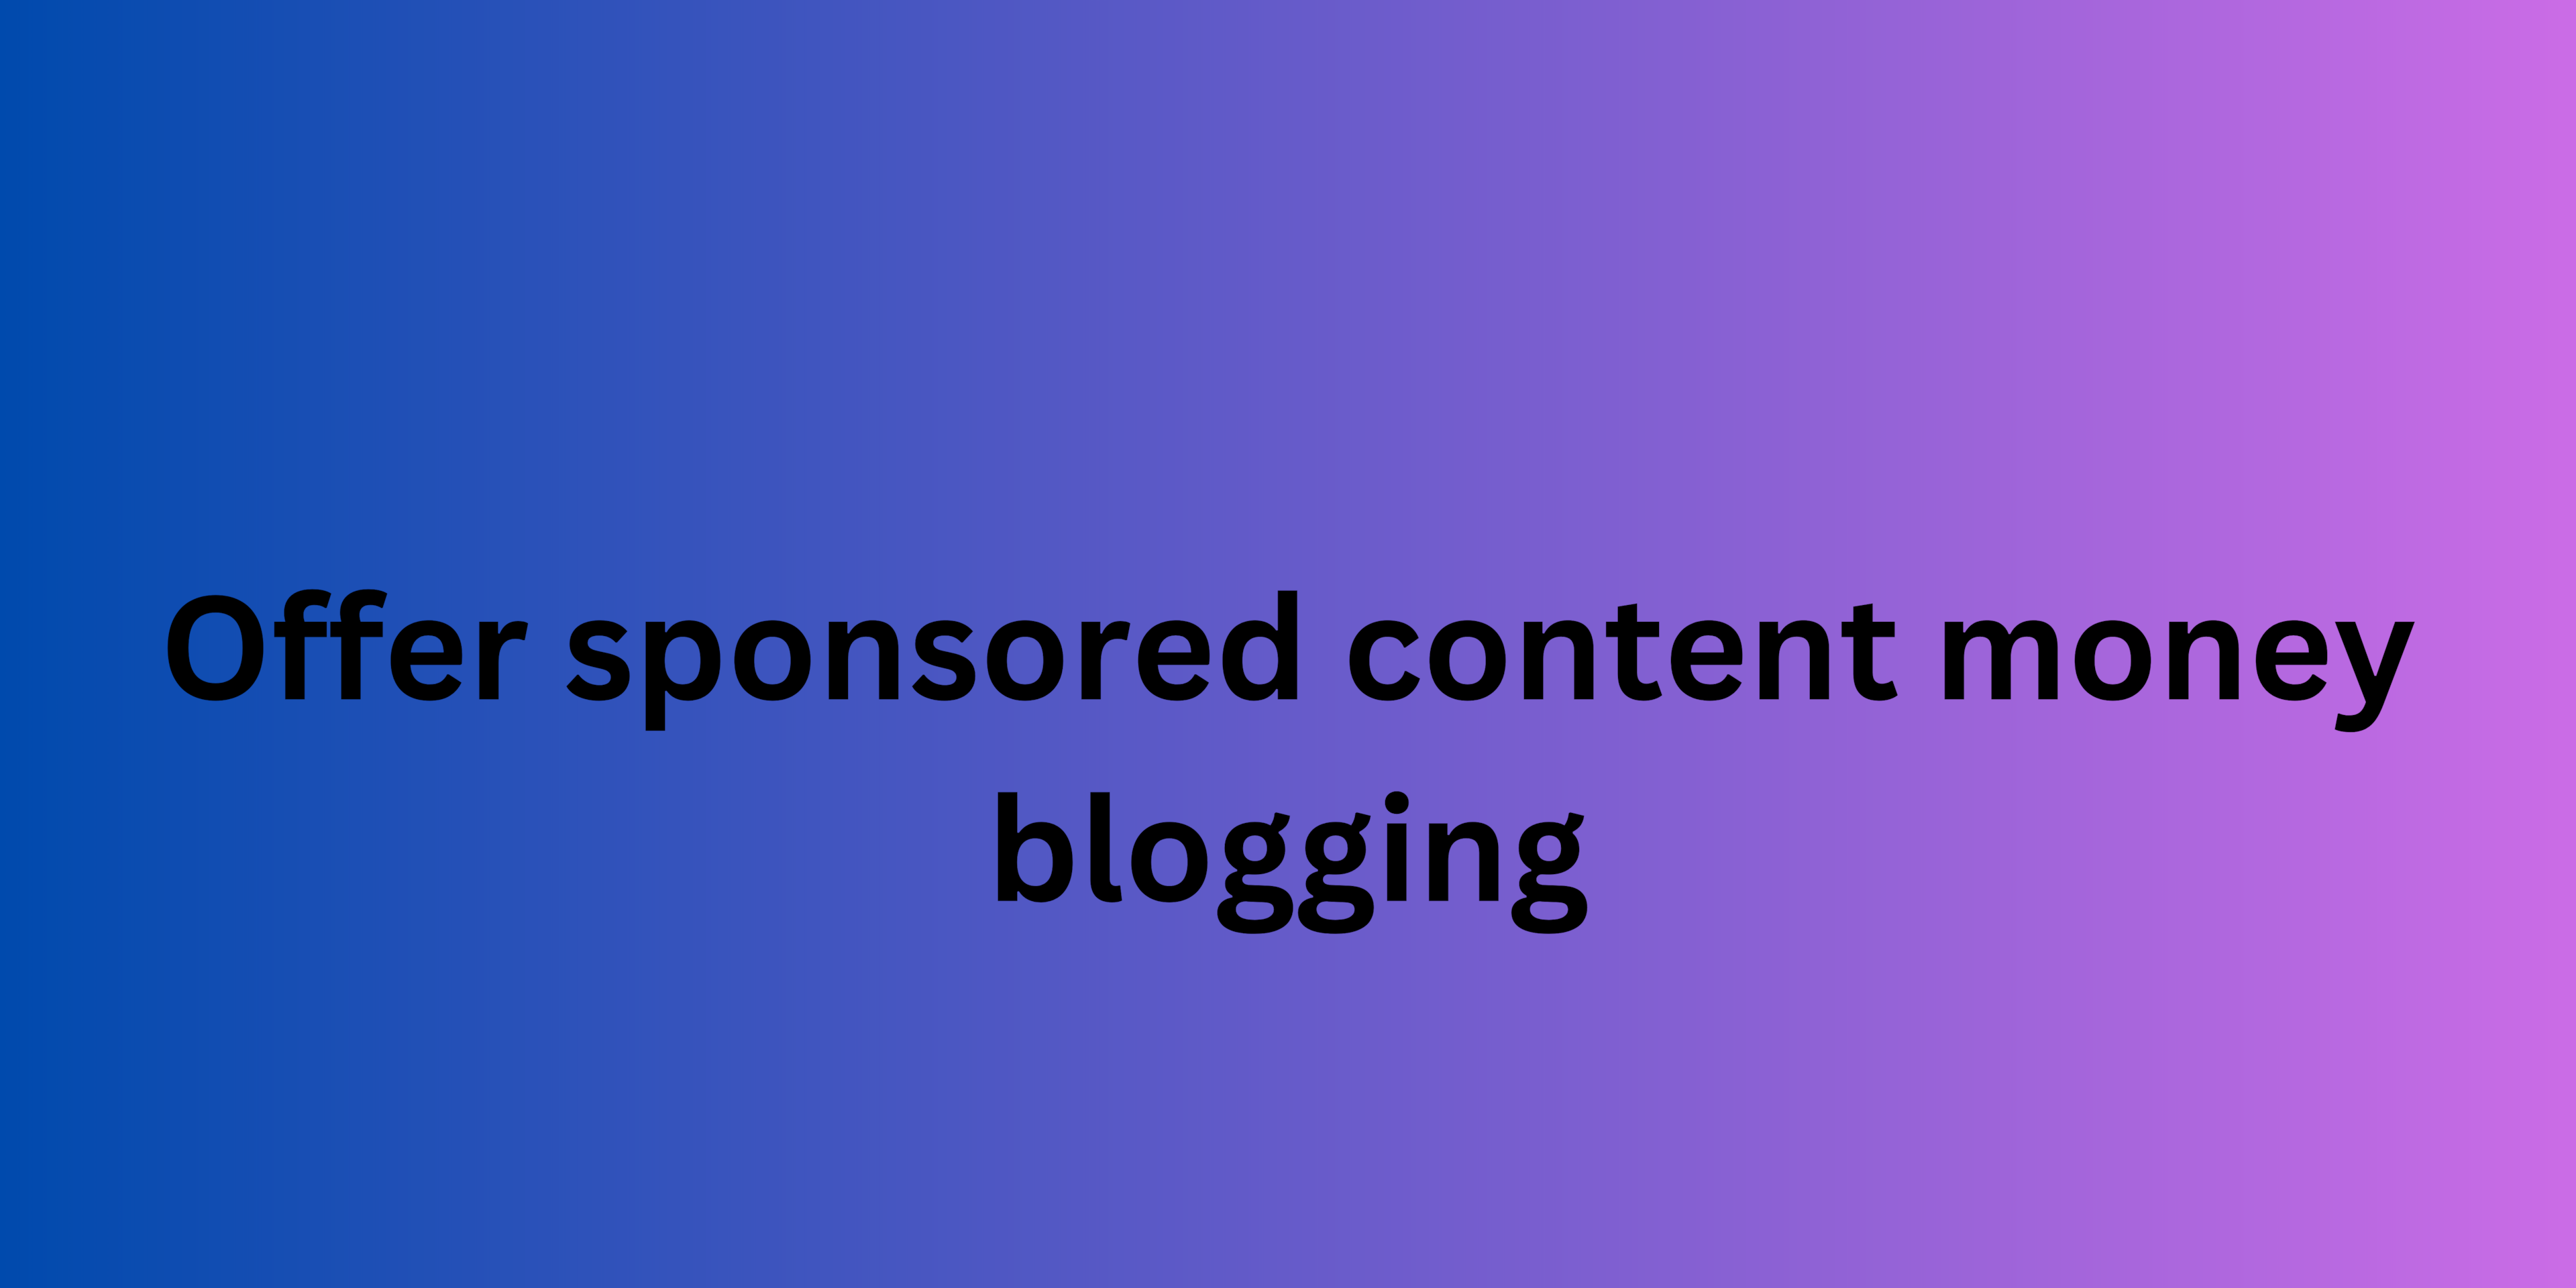 Offer sponsored content money blogging